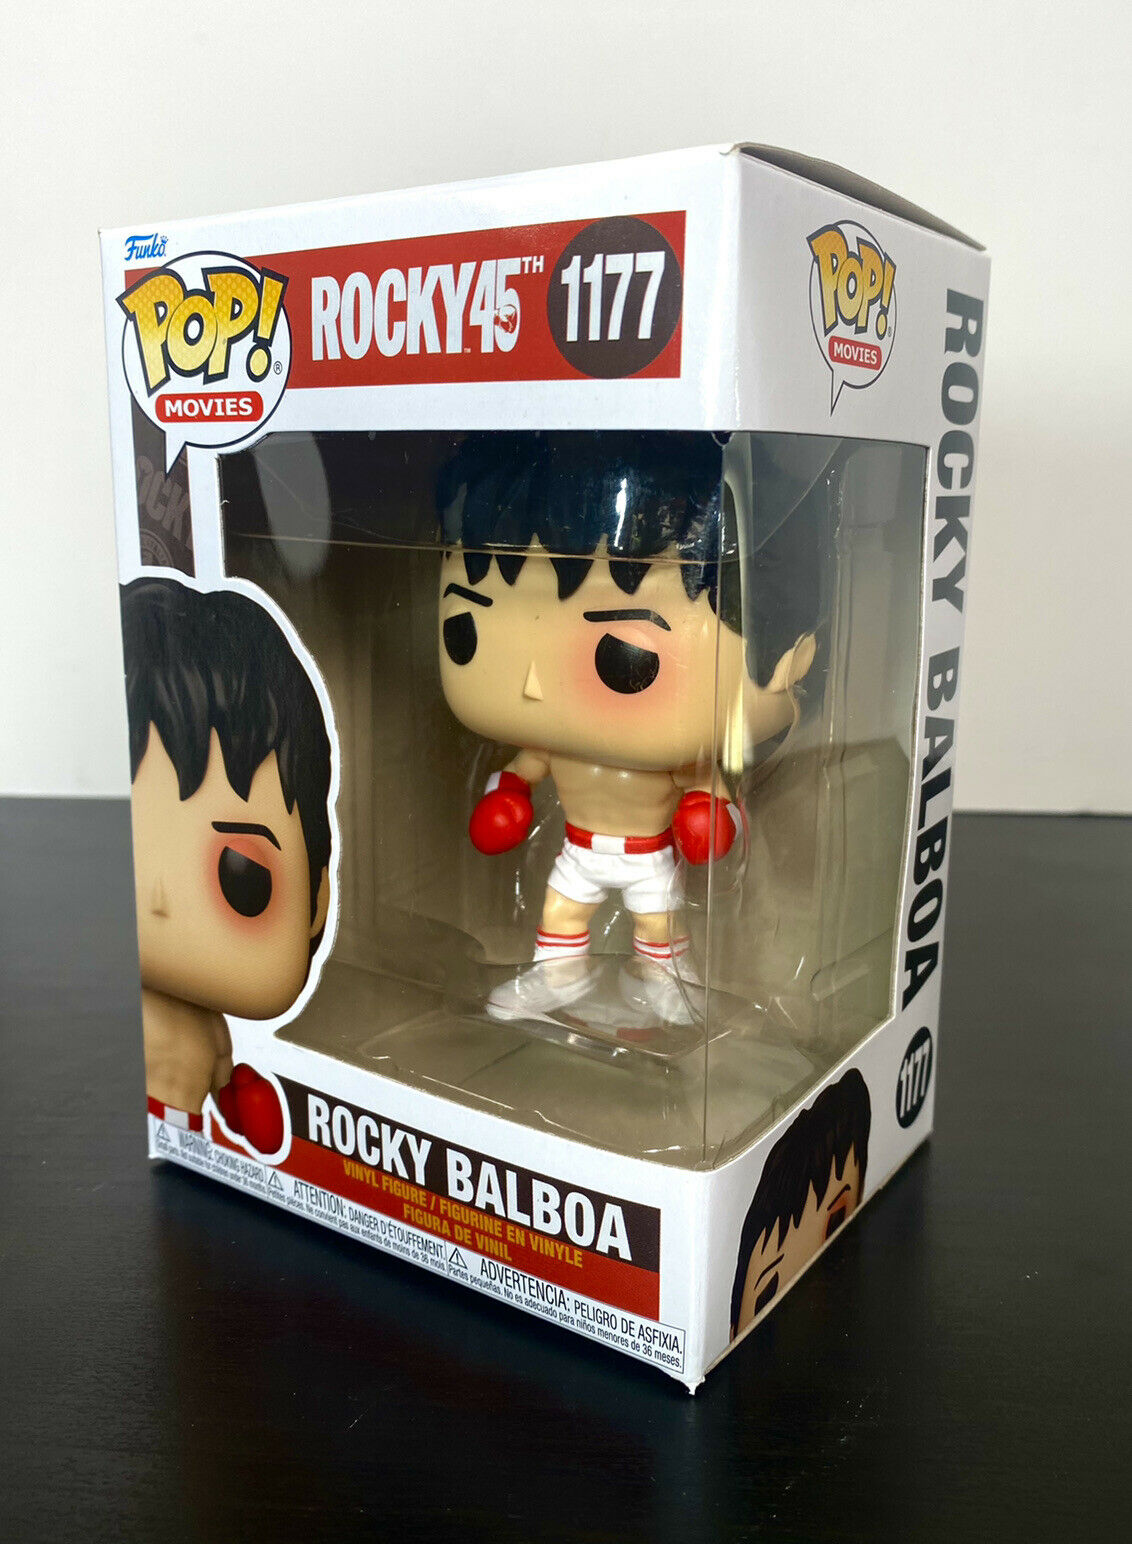 Funko Pop! Movies Rocky 45th Anniversary Rocky Balboa Figure #1177 - FW21 -  US